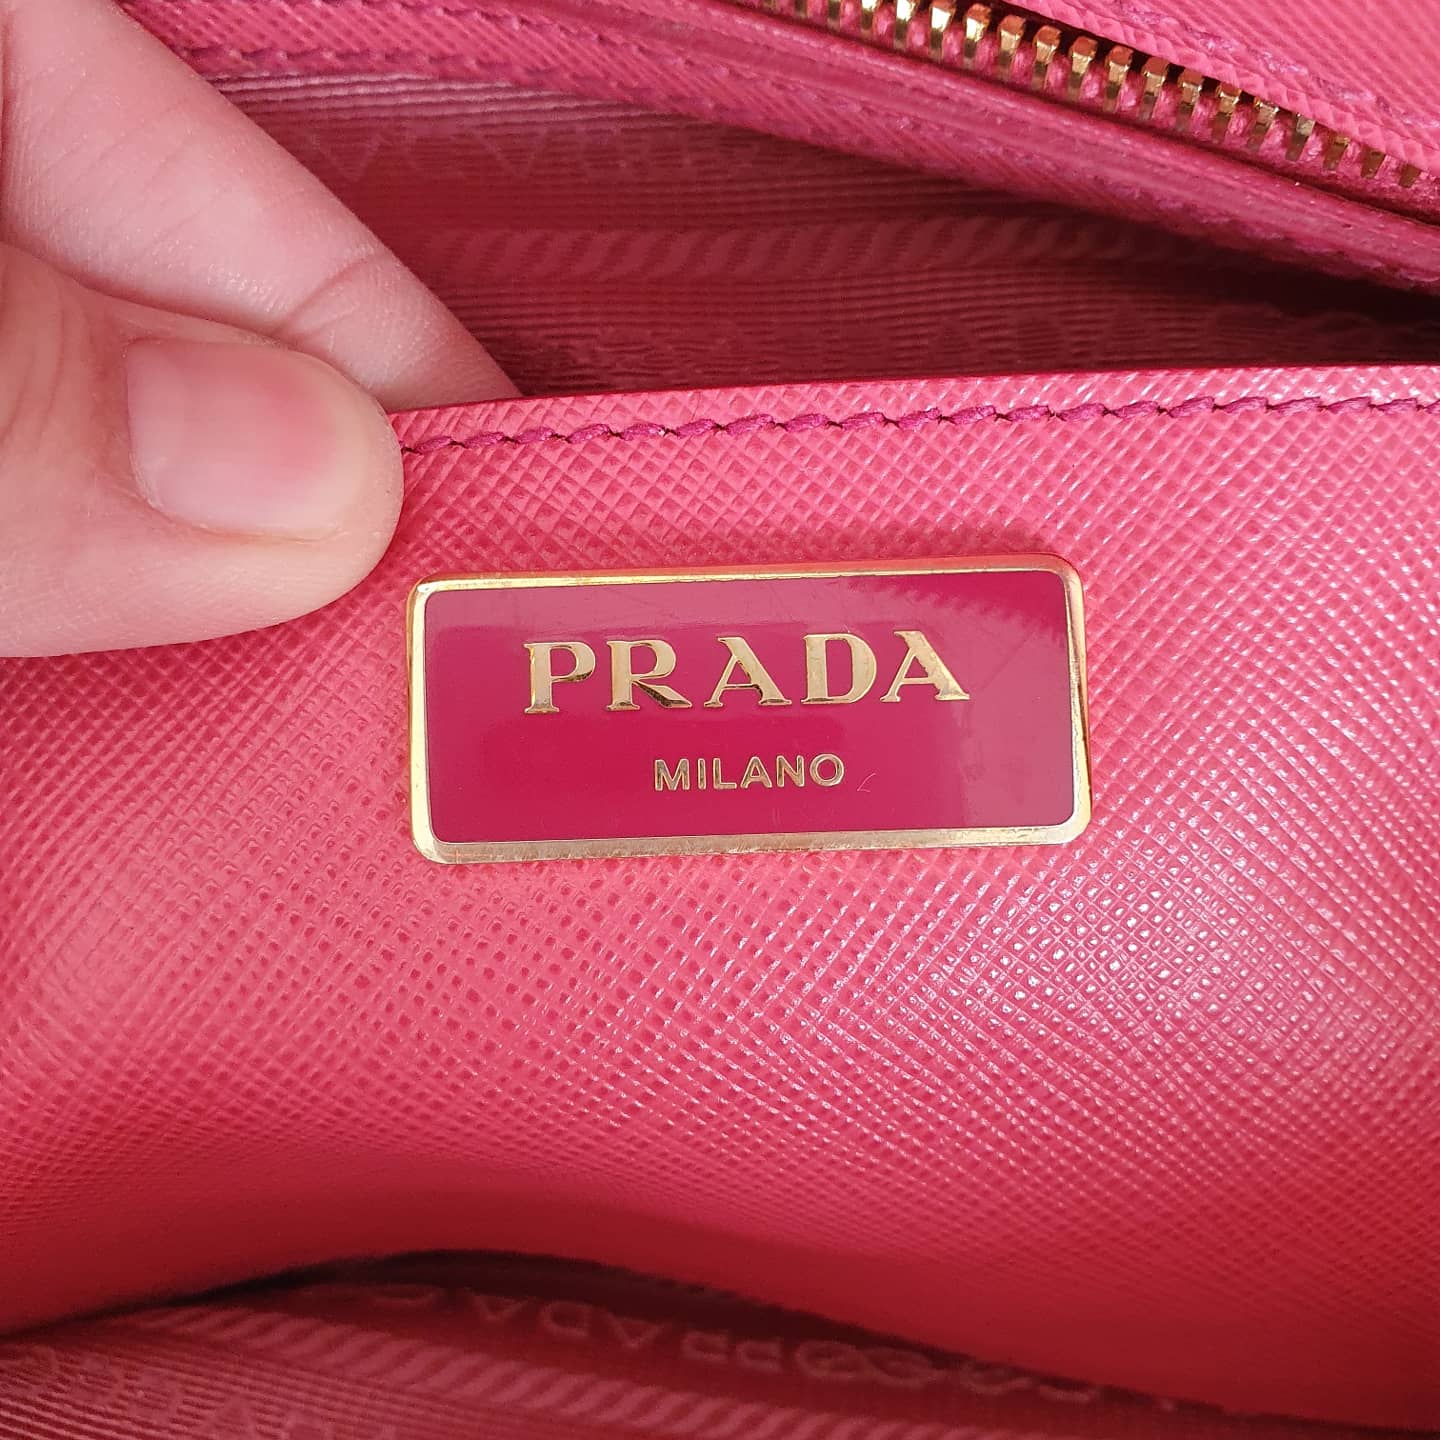 Prada Handbag Price Philippines | semashow.com